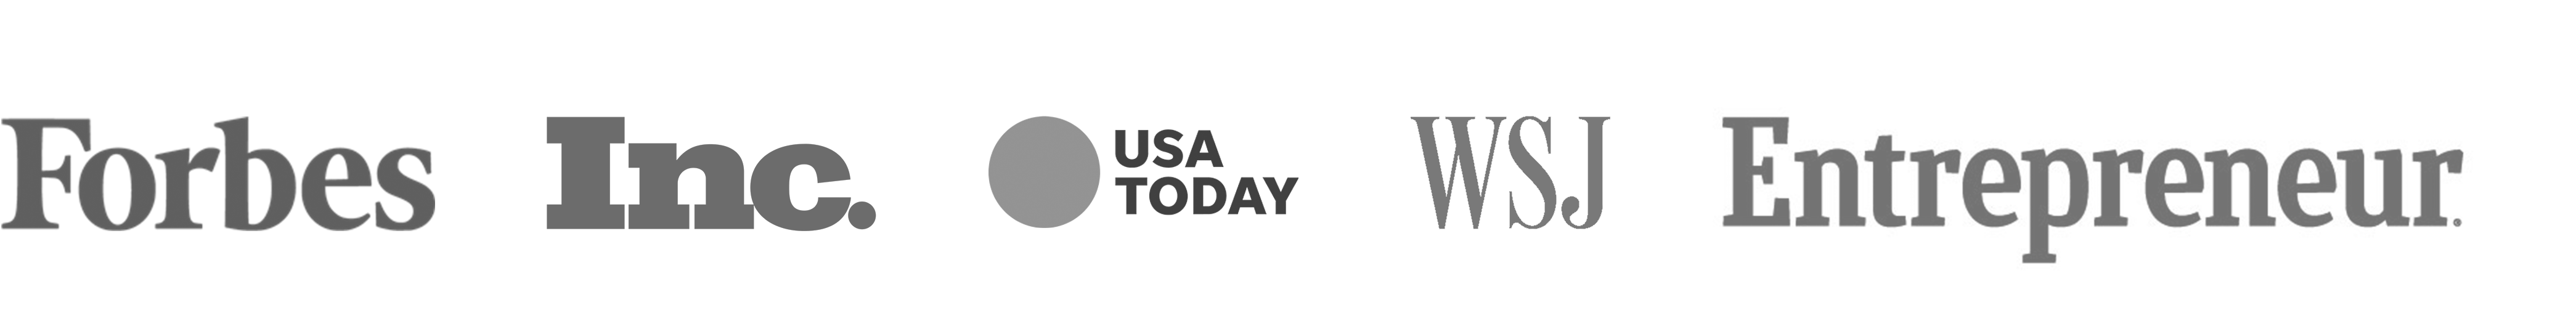 logos of Forbes, Inc., USA Today, WSJ, and Entrepreneur to showcase Norton Results' credibility.